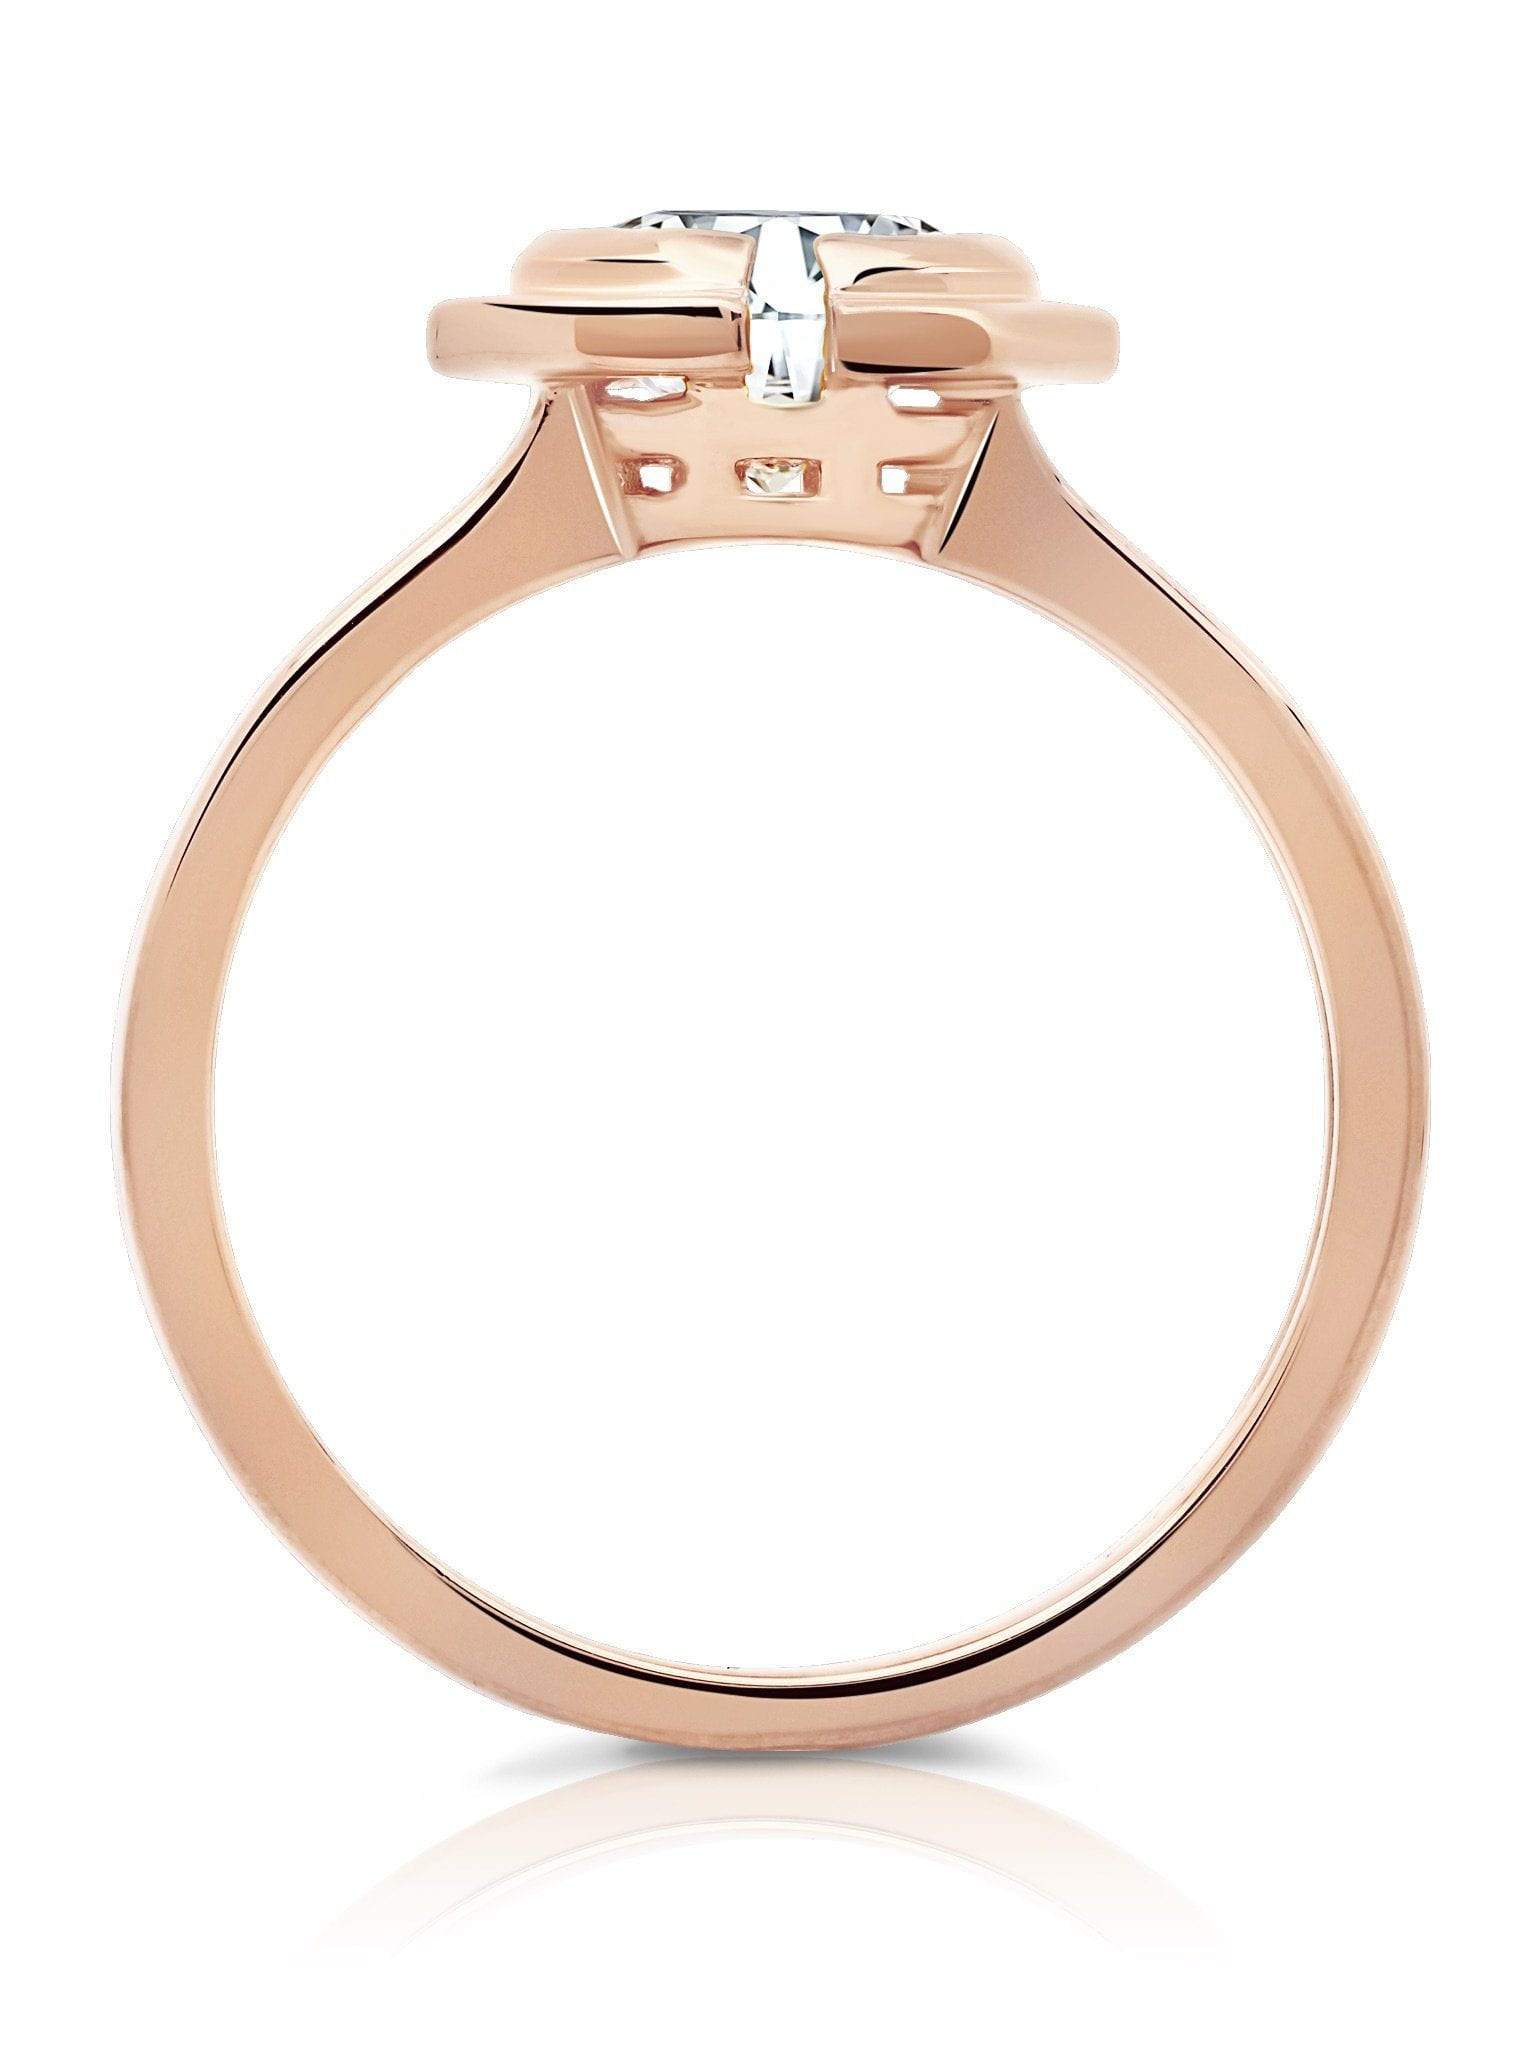 Crislu Jewelry Crislu Solara Ring finished in 18kt Rose Gold Size 6